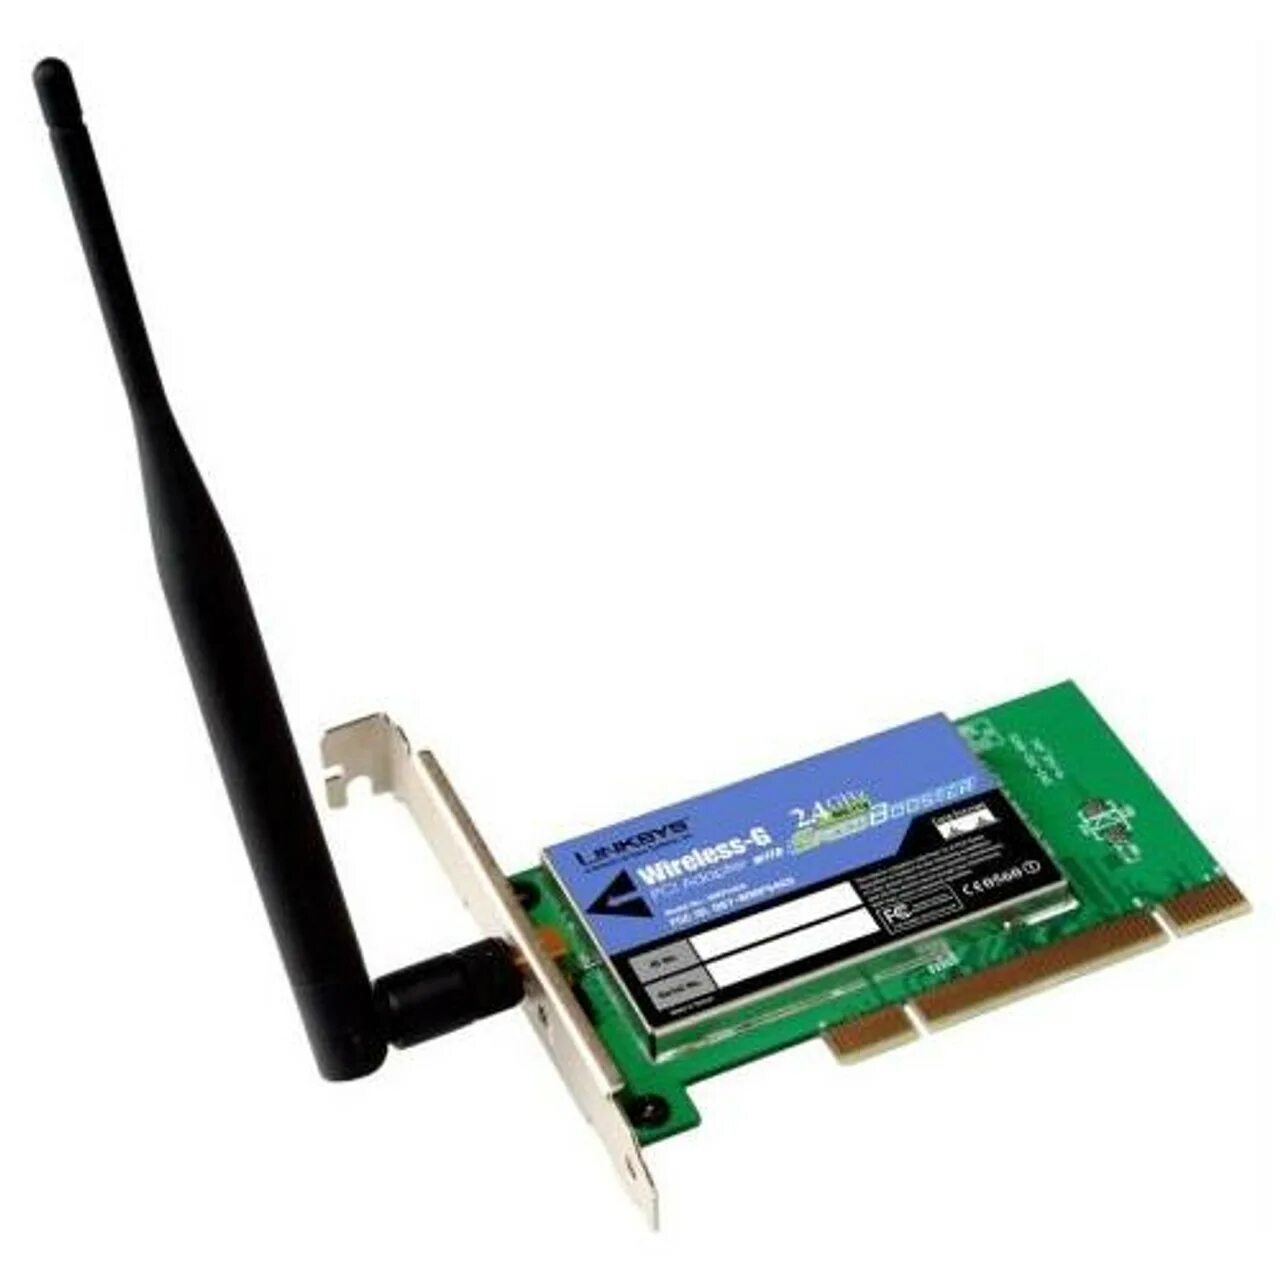 Linksys wmp54g v4.1 Wireless-g PCI Adapter. Wi-Fi адаптер Linksys wga54g. Broadcom 802.11g Network Adapter. Wi-Fi адаптер Linksys wusb600n.